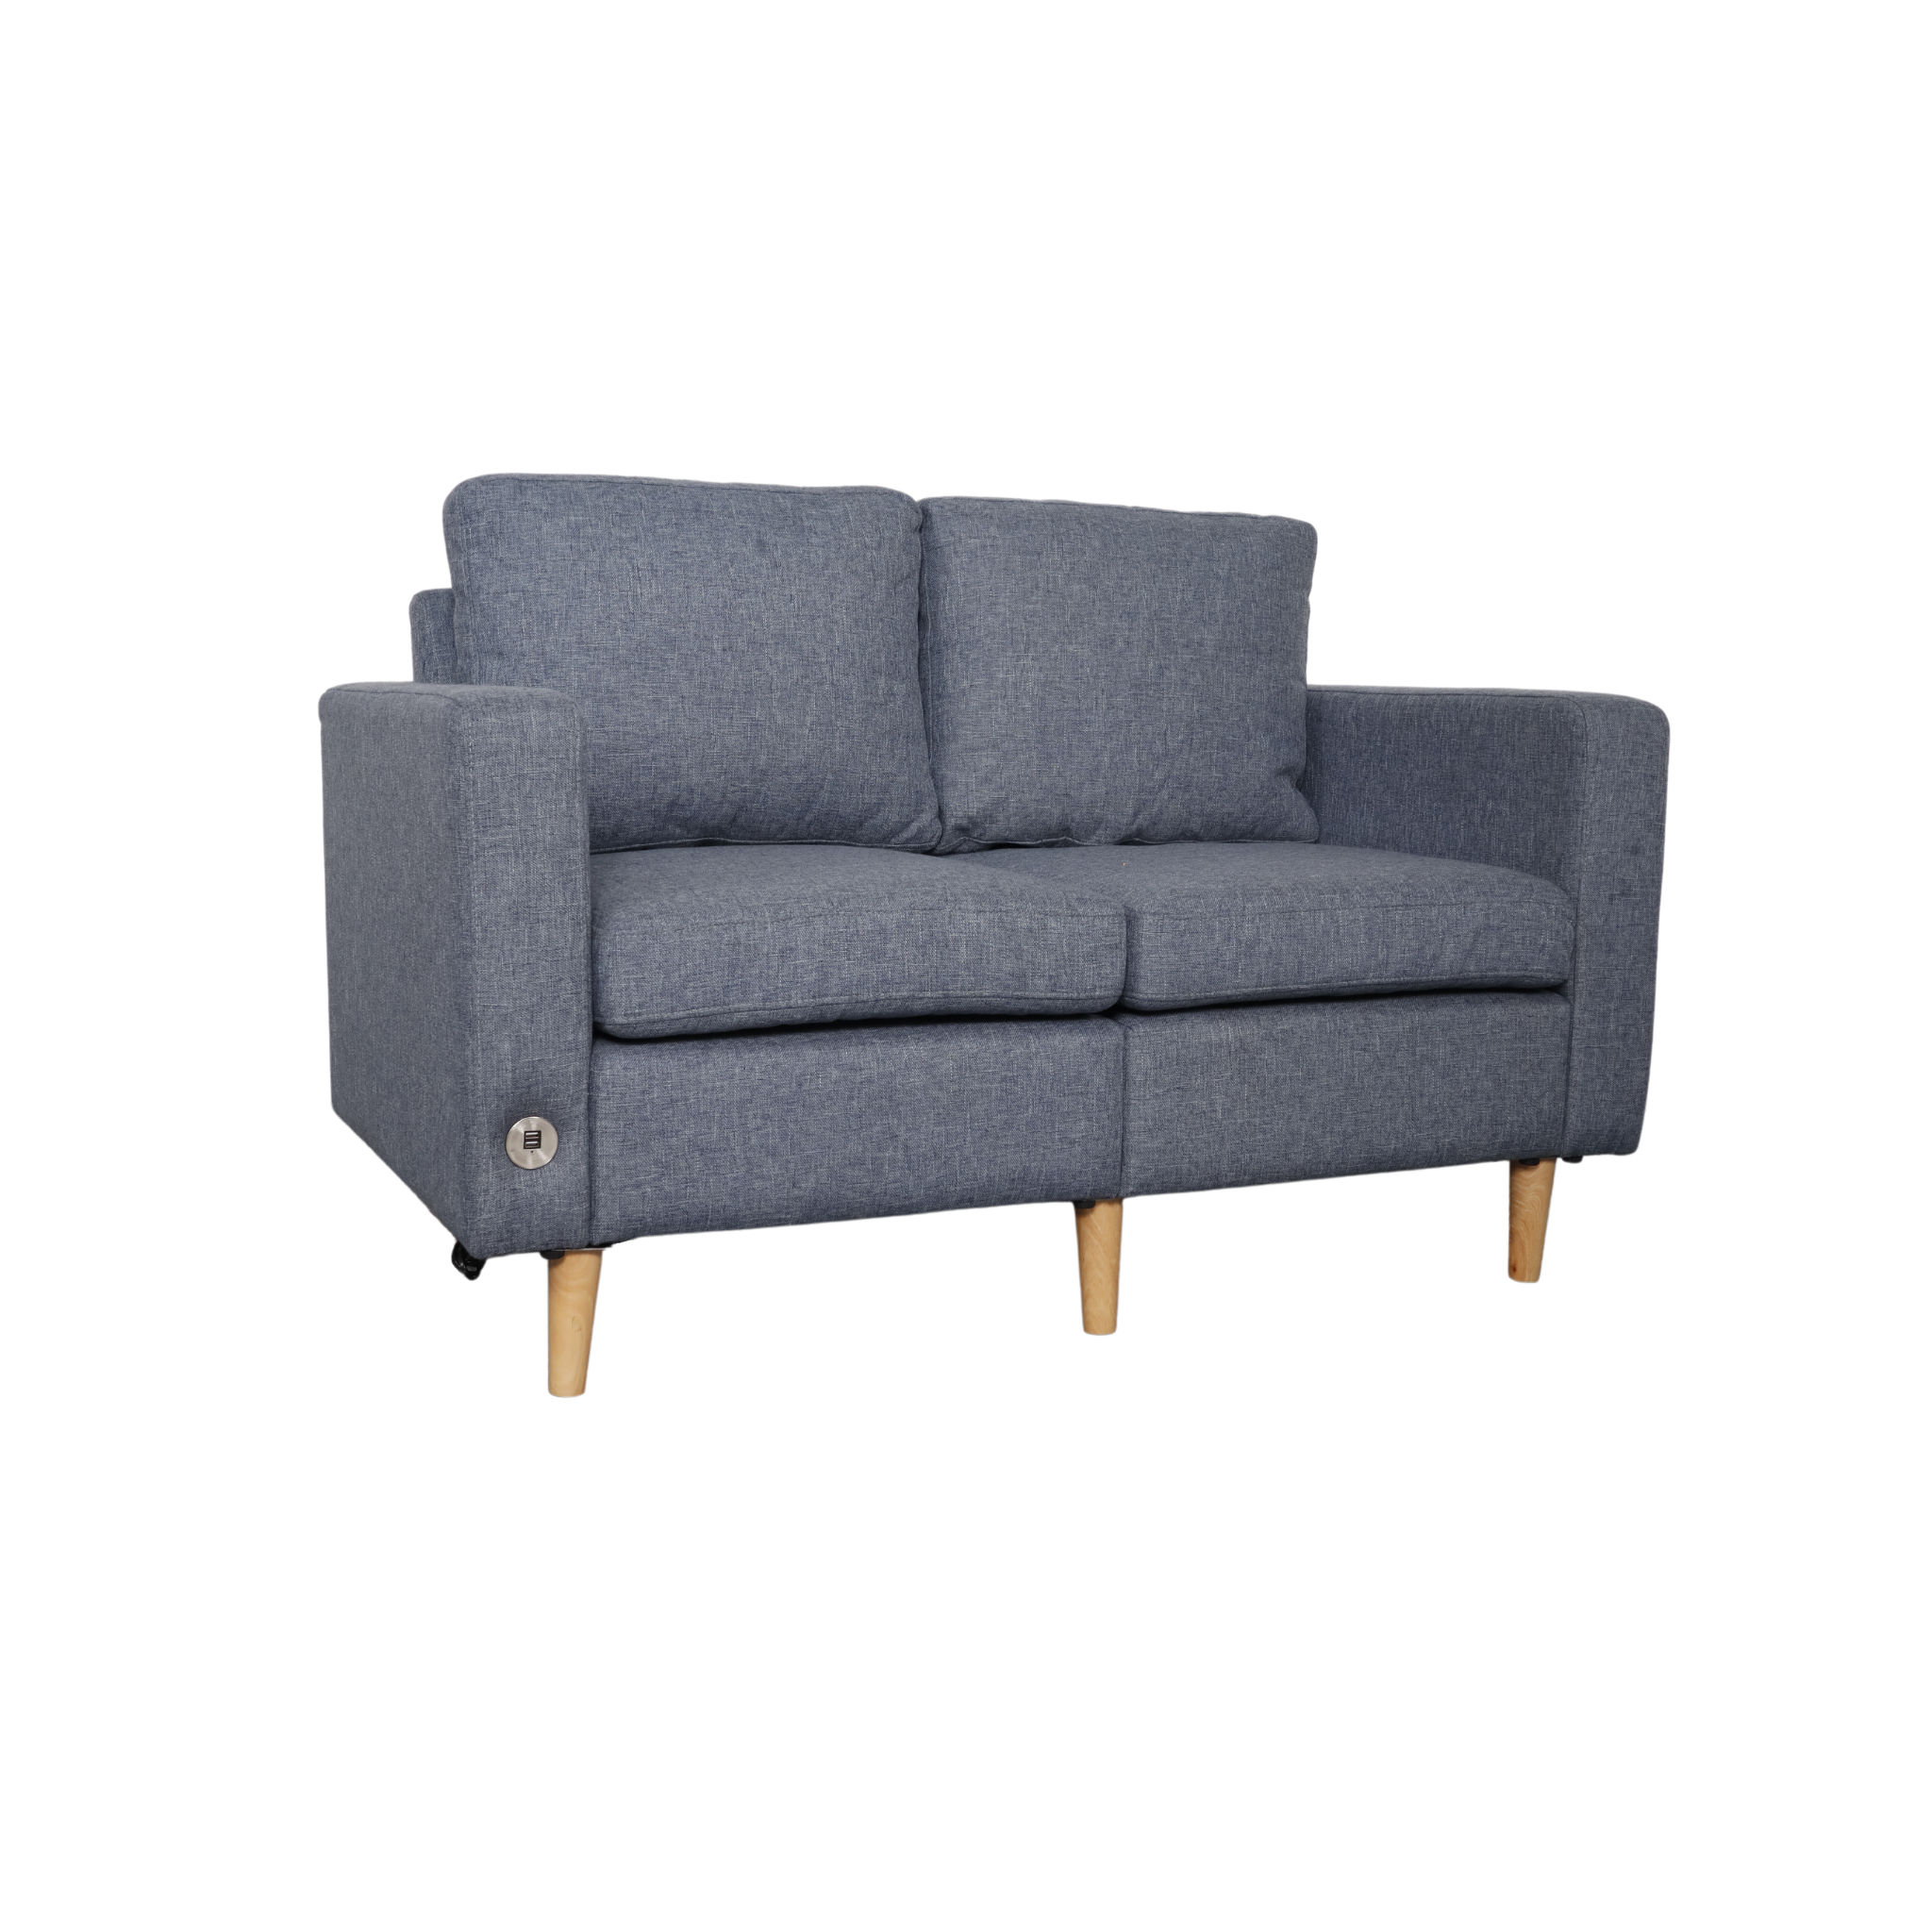 Tinker - Cocoon Series 2-Seater Fabric Sofa Tinker Furniture